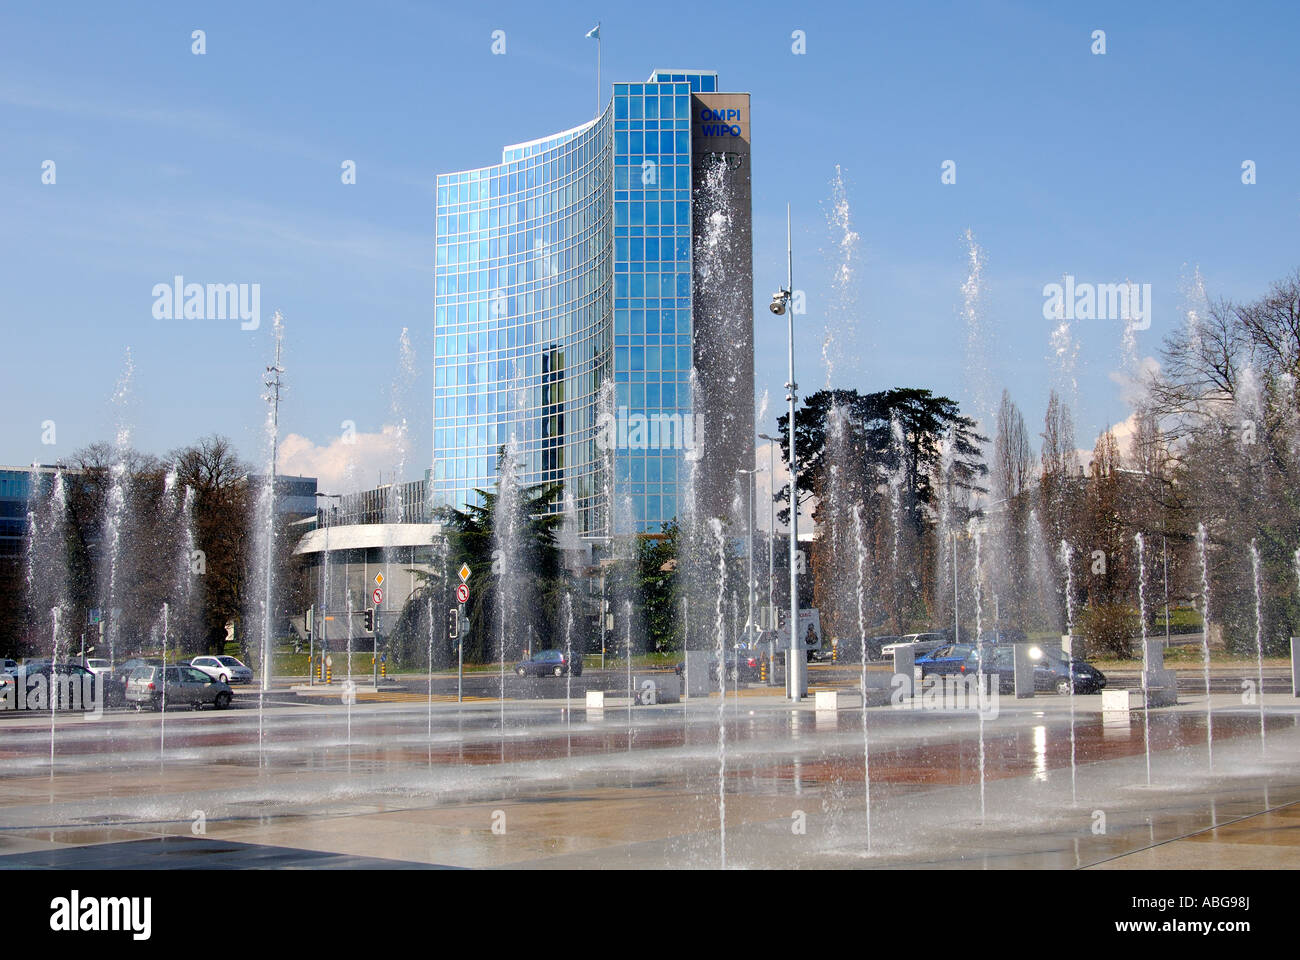 Place des Nations, headquarter builduing of the World Intellectual Property Organization WIPO, hGeneva, Switzerland Stock Photo